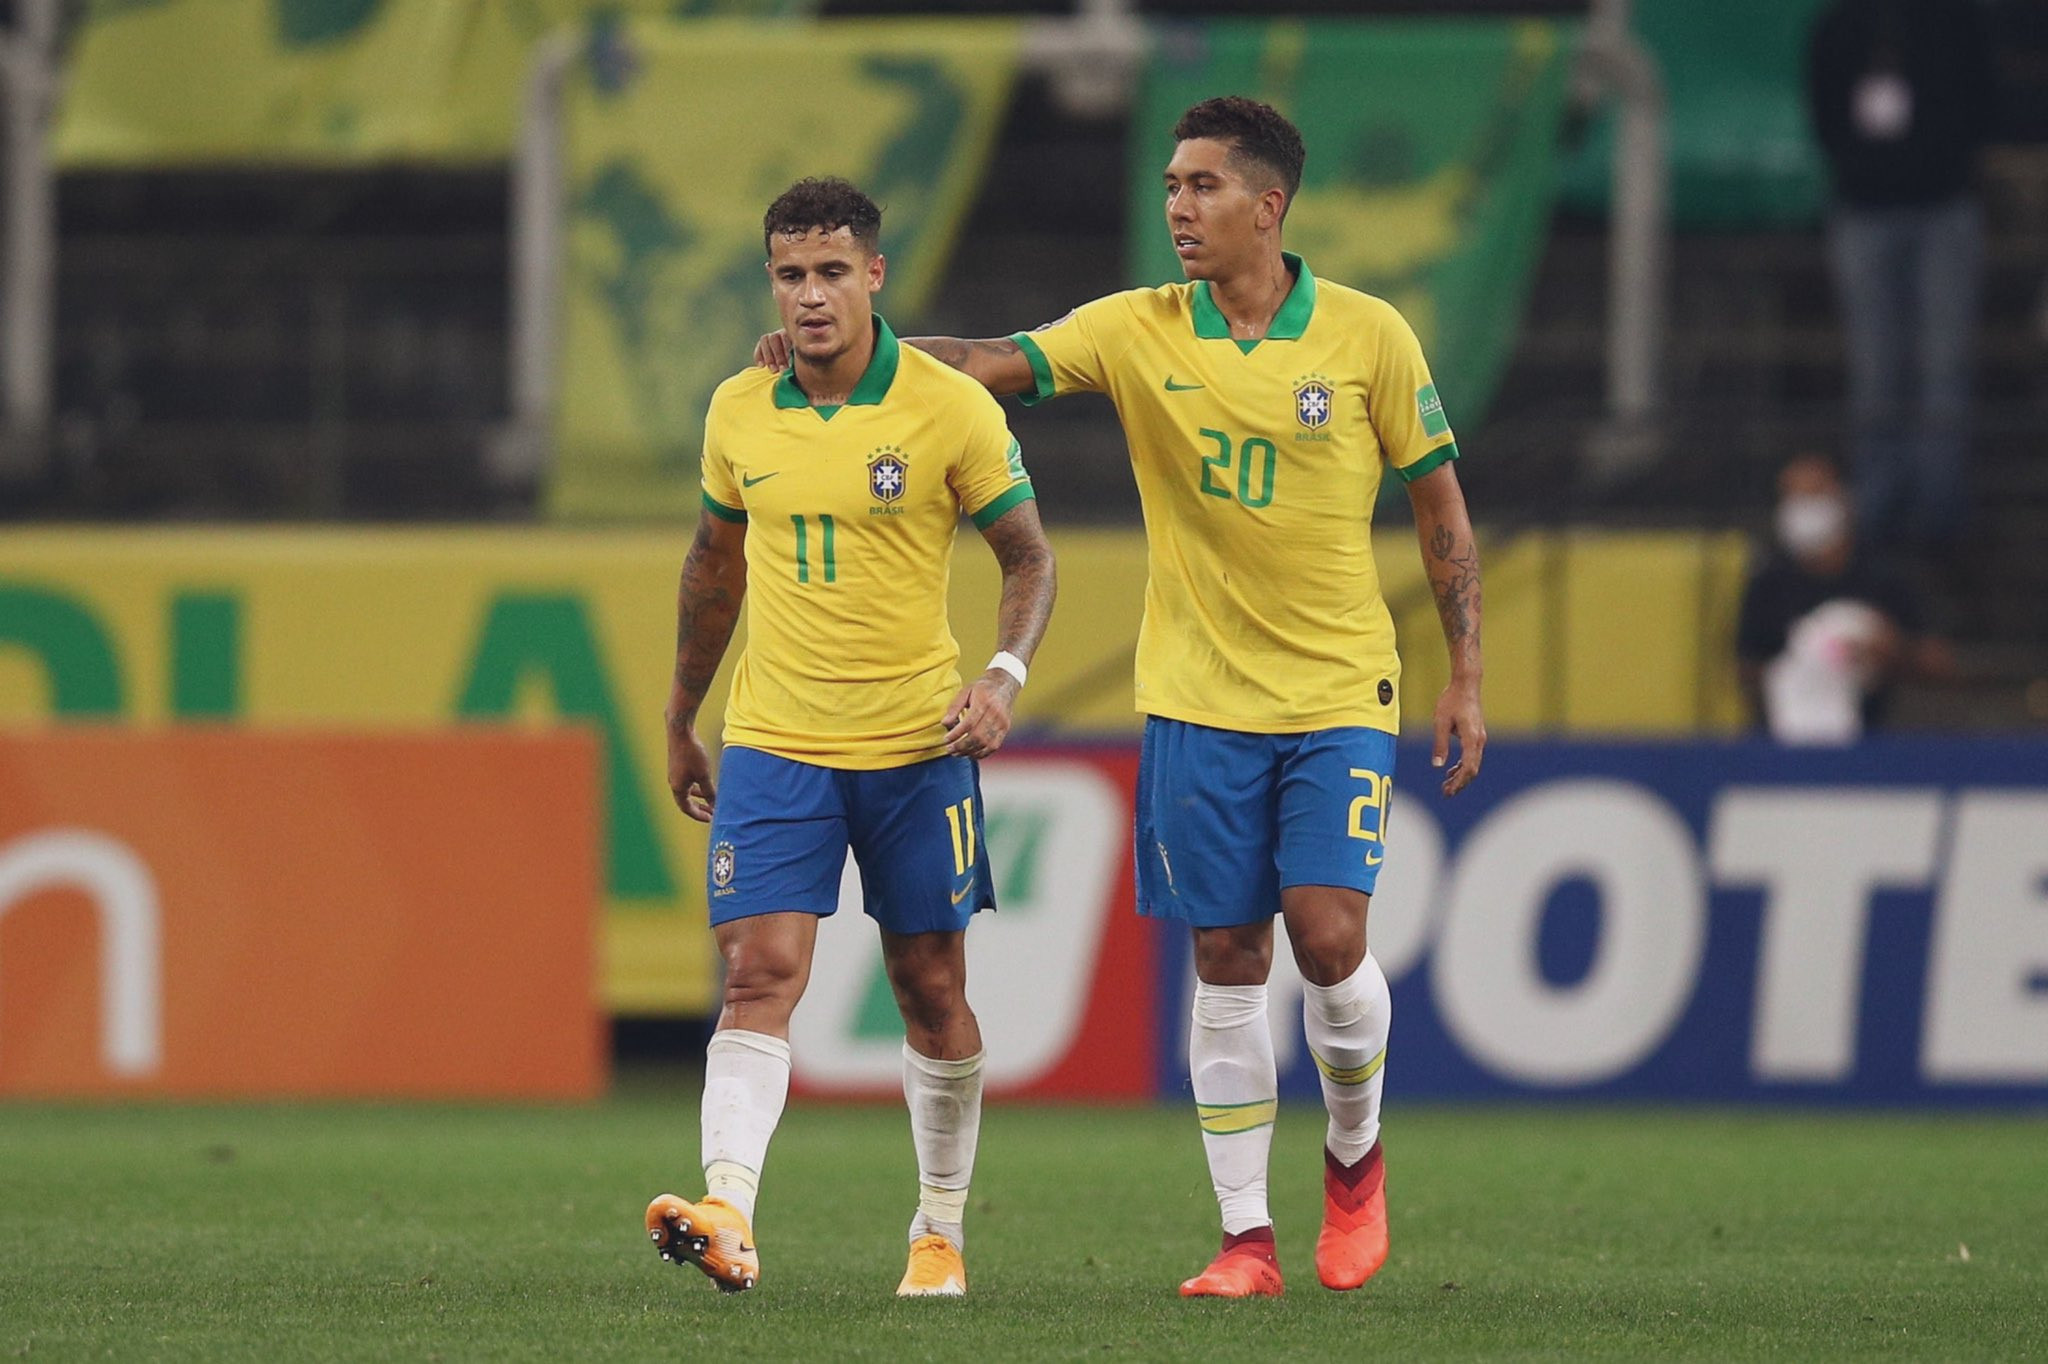 Coutinho y Firmino celebrando un gol de Brasil / EFE